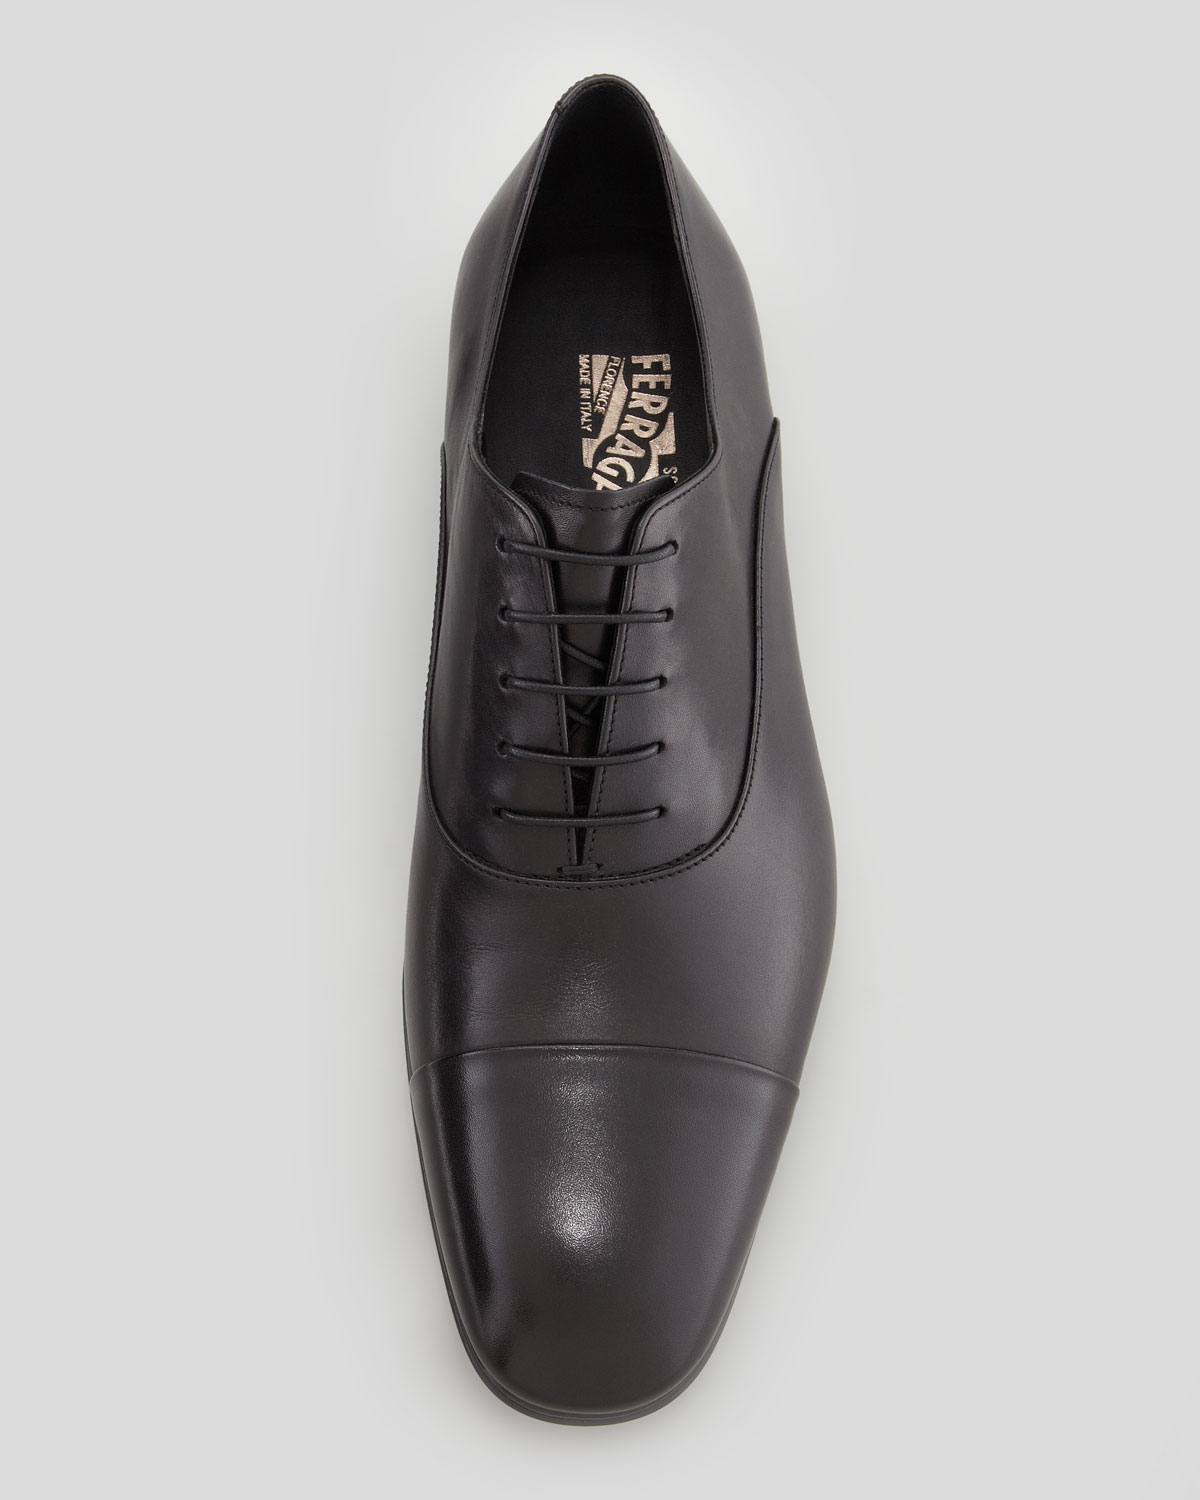 Lyst - Ferragamo Fantino Lace-up Shoe, Black in Black for Men